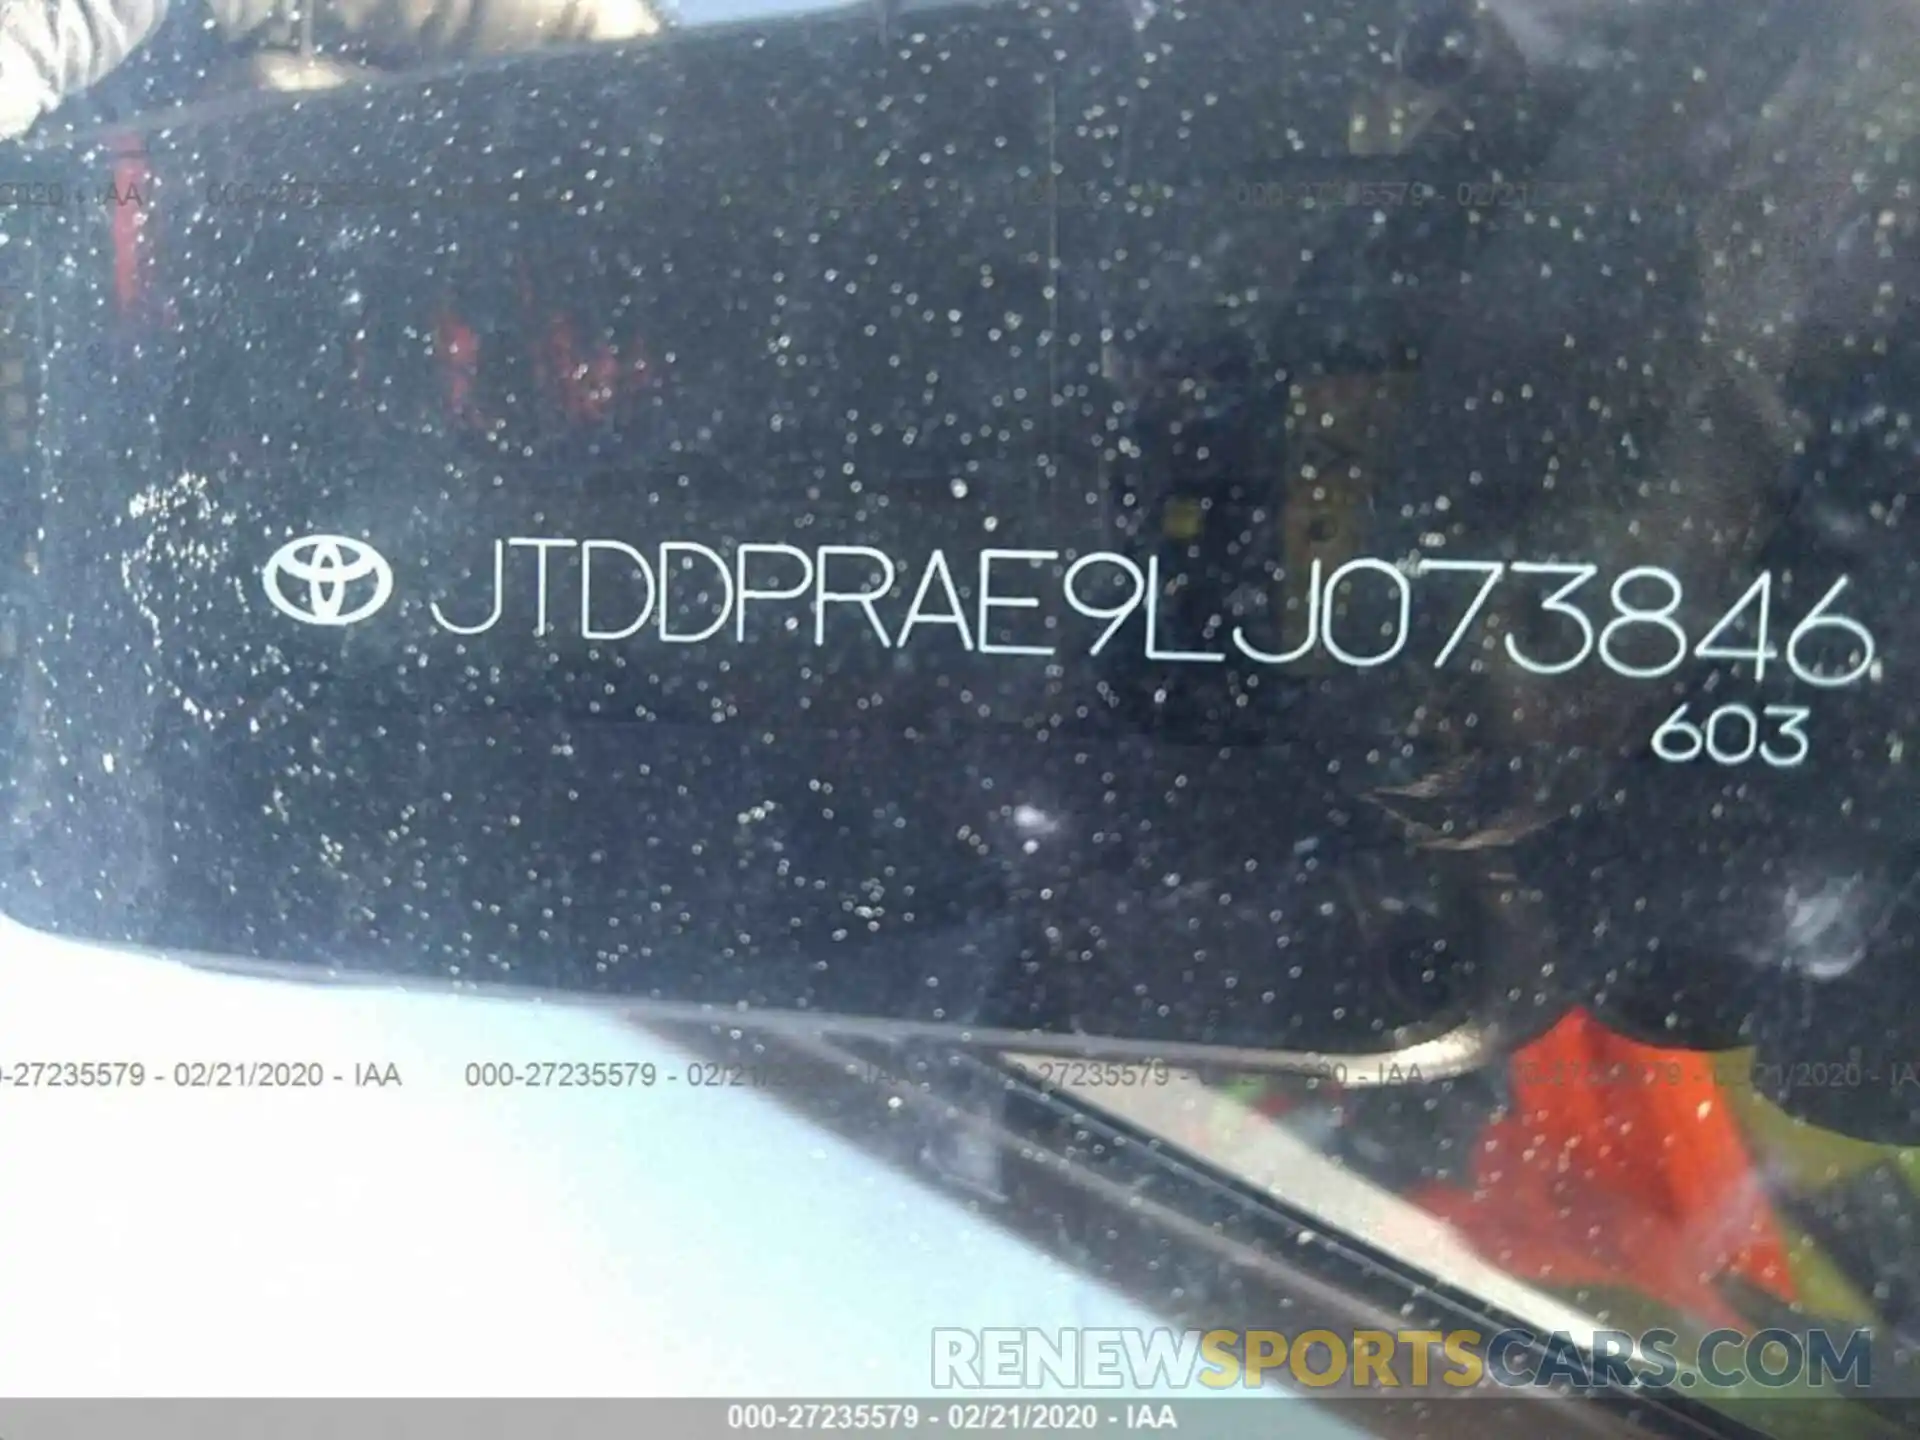 9 Photograph of a damaged car JTDDPRAE9LJ073846 TOYOTA COROLLA 2020